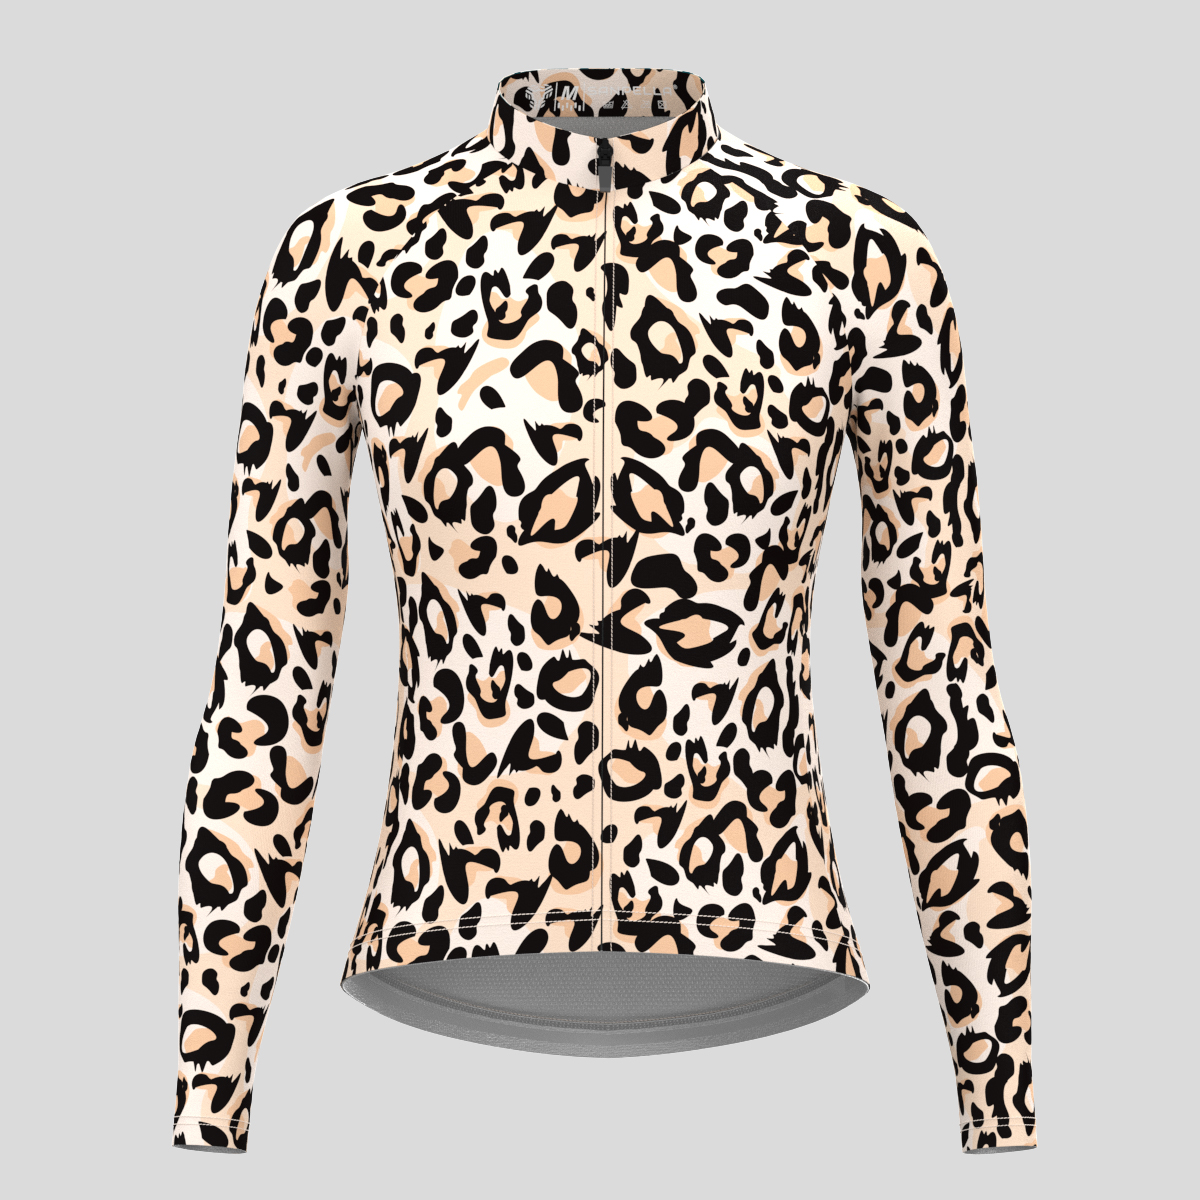 Leopard Print Women's LS Cycling Jersey 